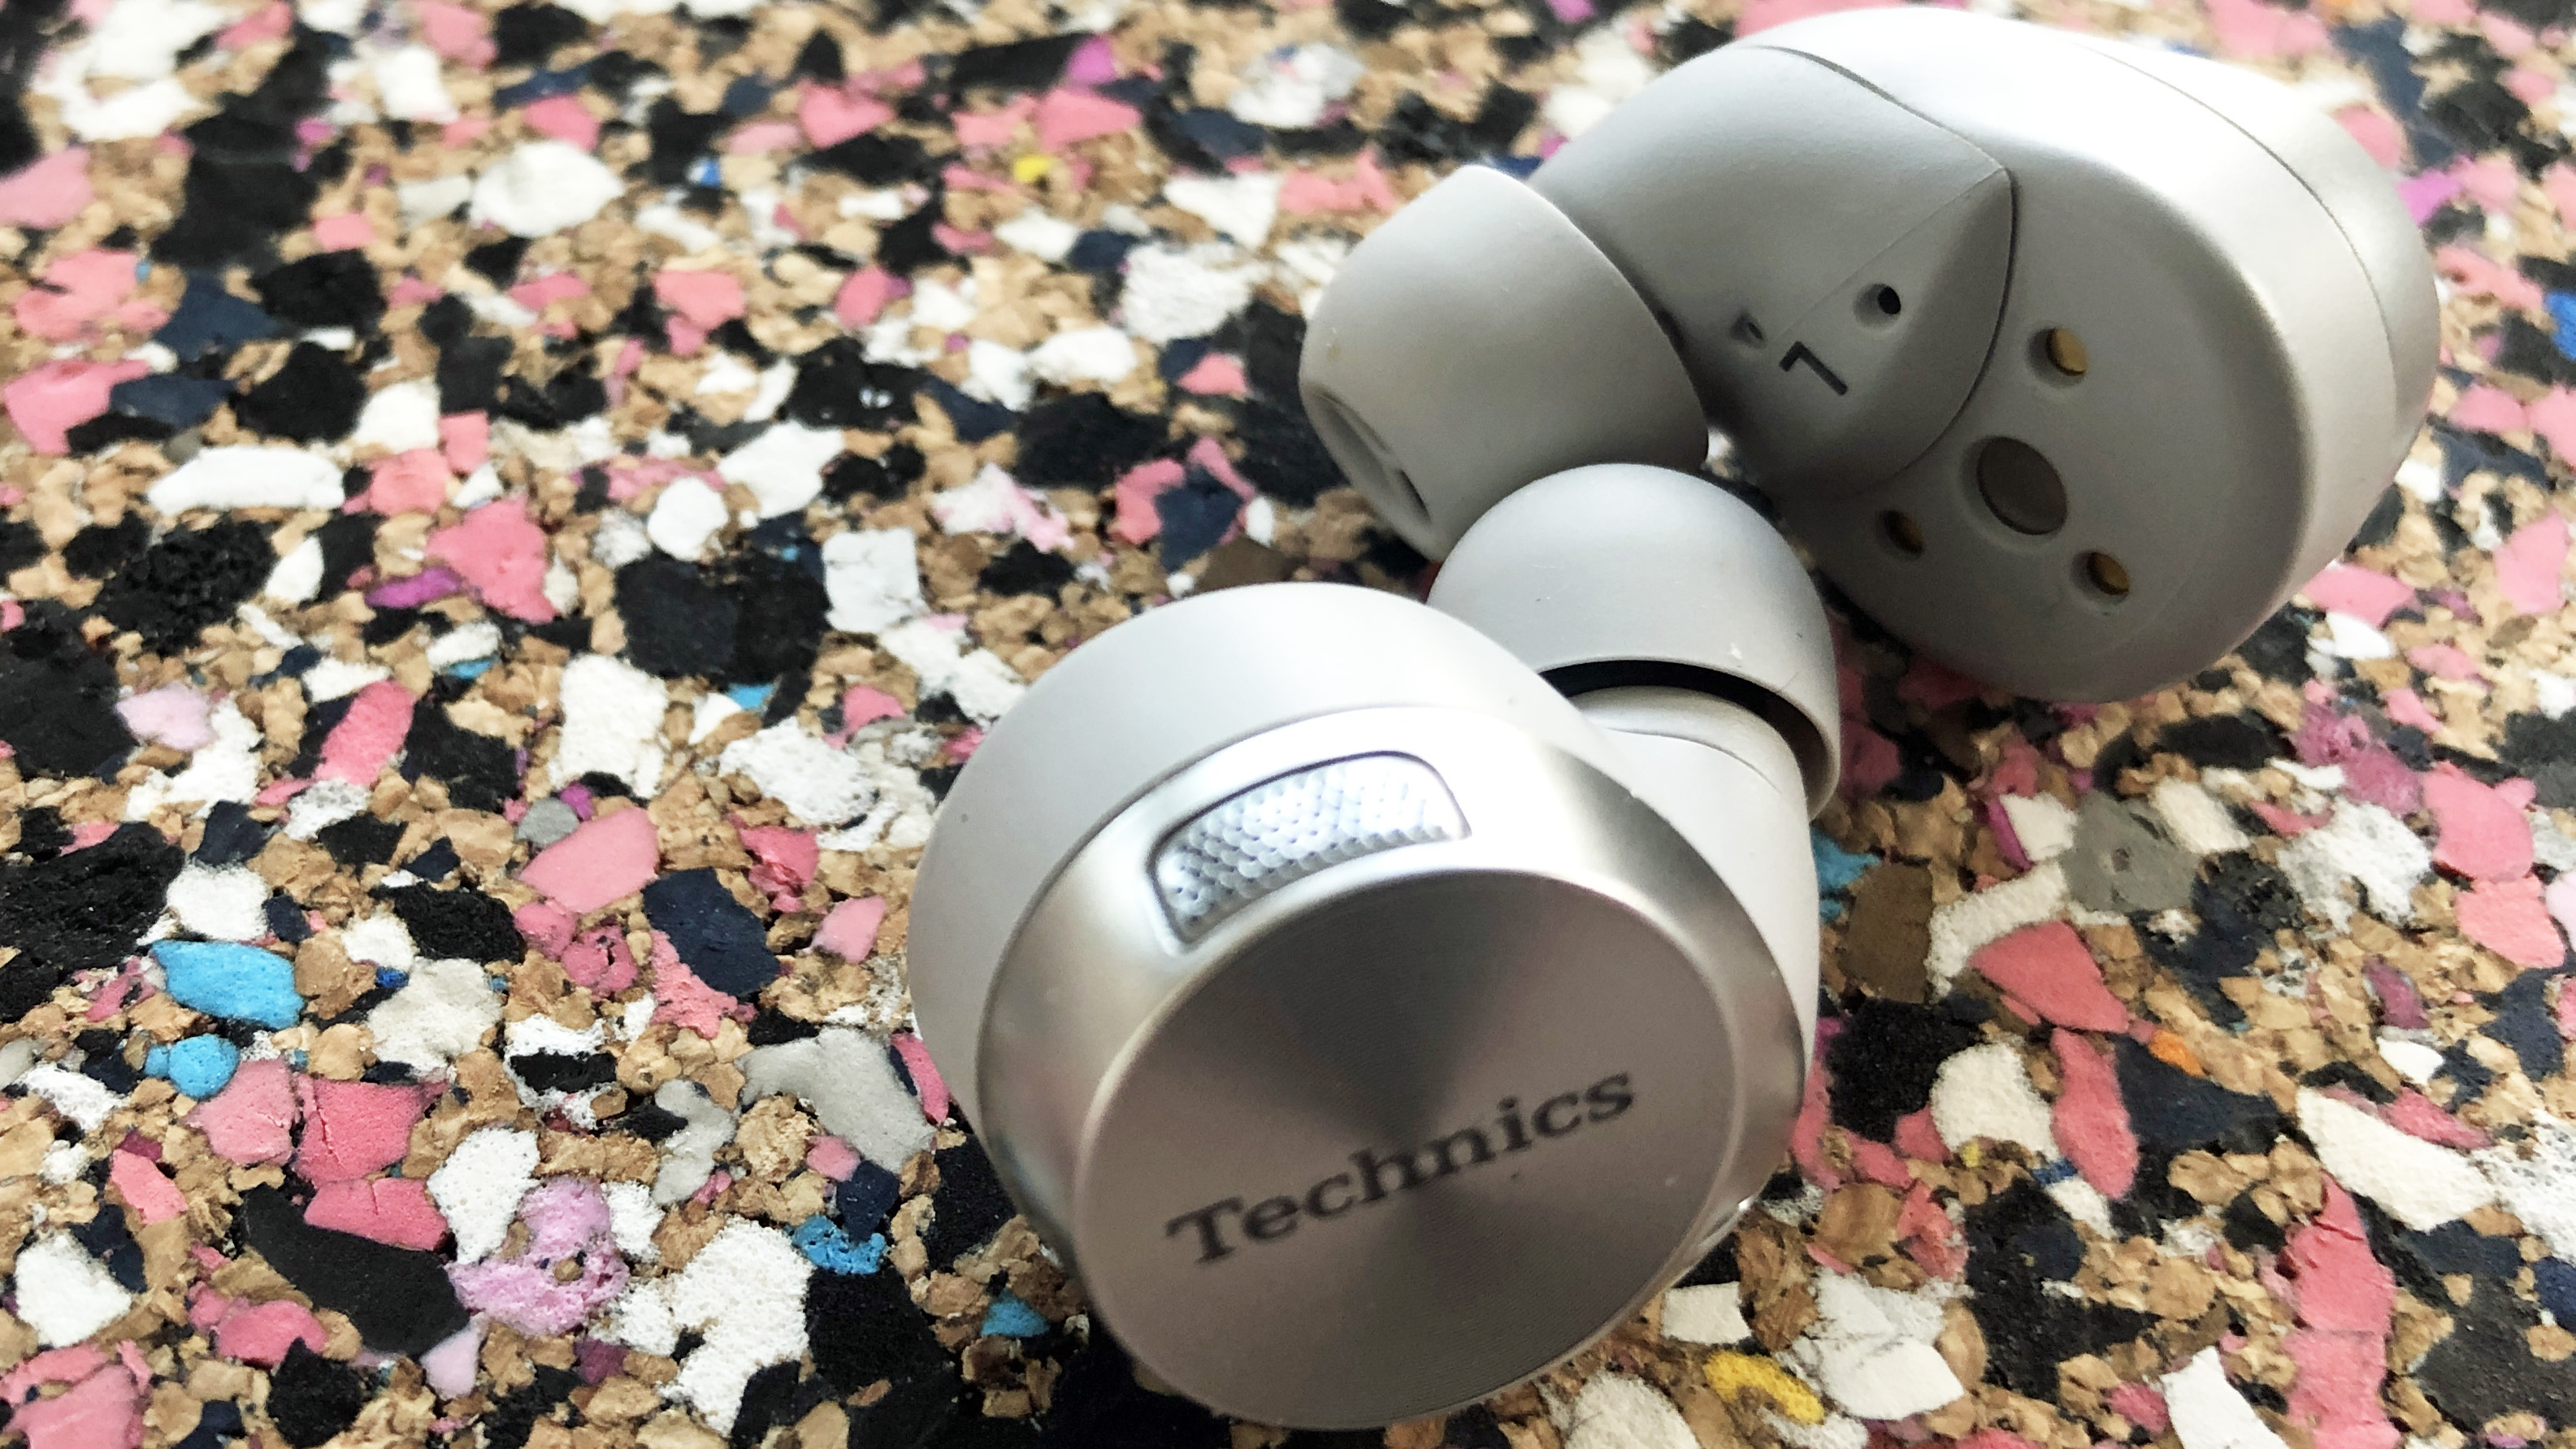 the technics eah-az60 true wireless earbuds